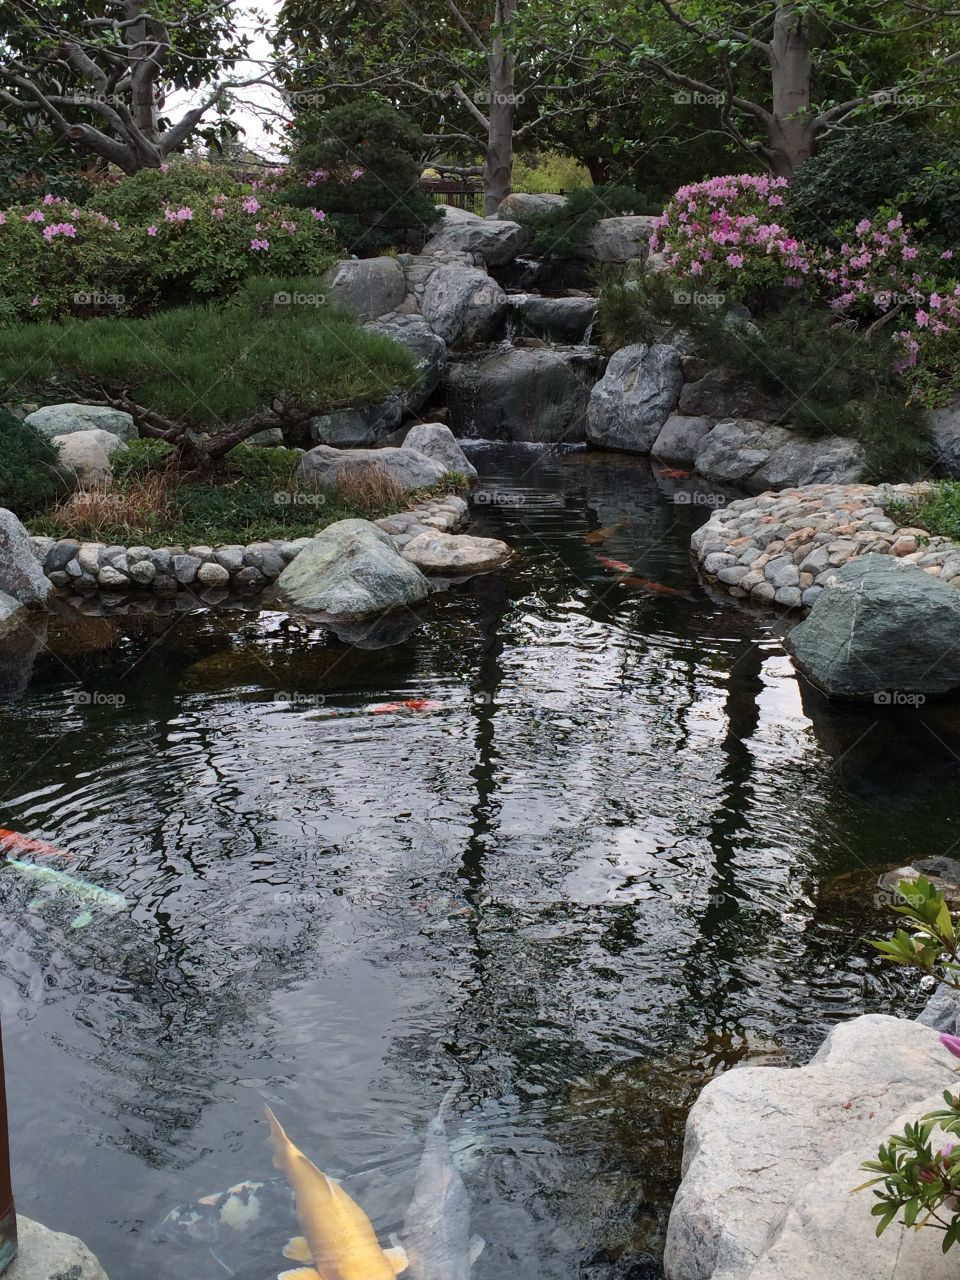 Japanese Garden Pond. A serene Koi pond in a Southern California Japanese Garden at Balboa Park